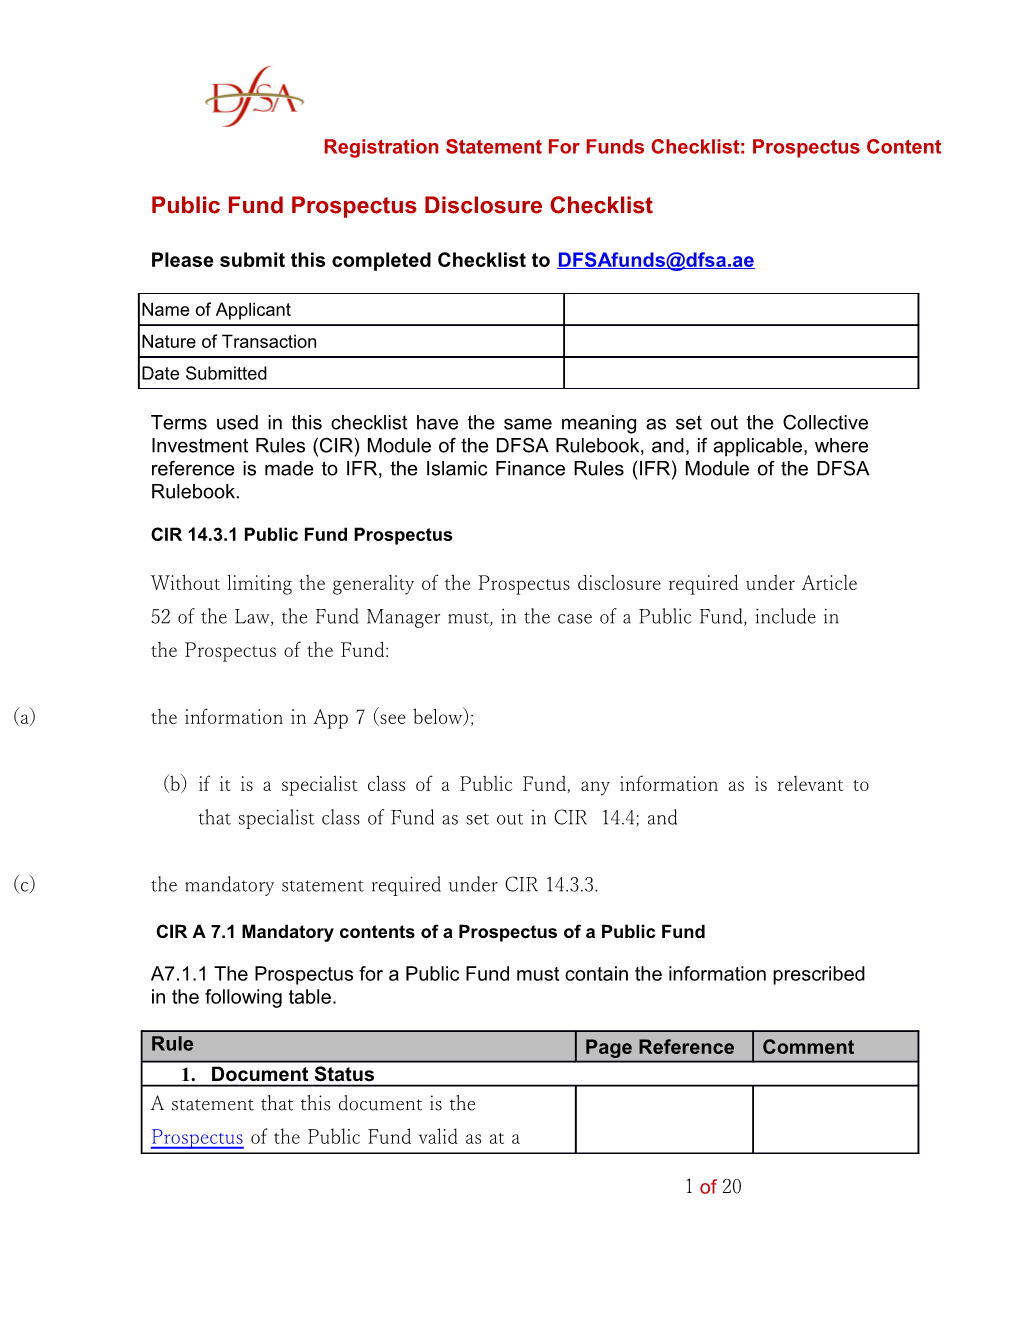 Public Fund Prospectus Disclosure Checklist